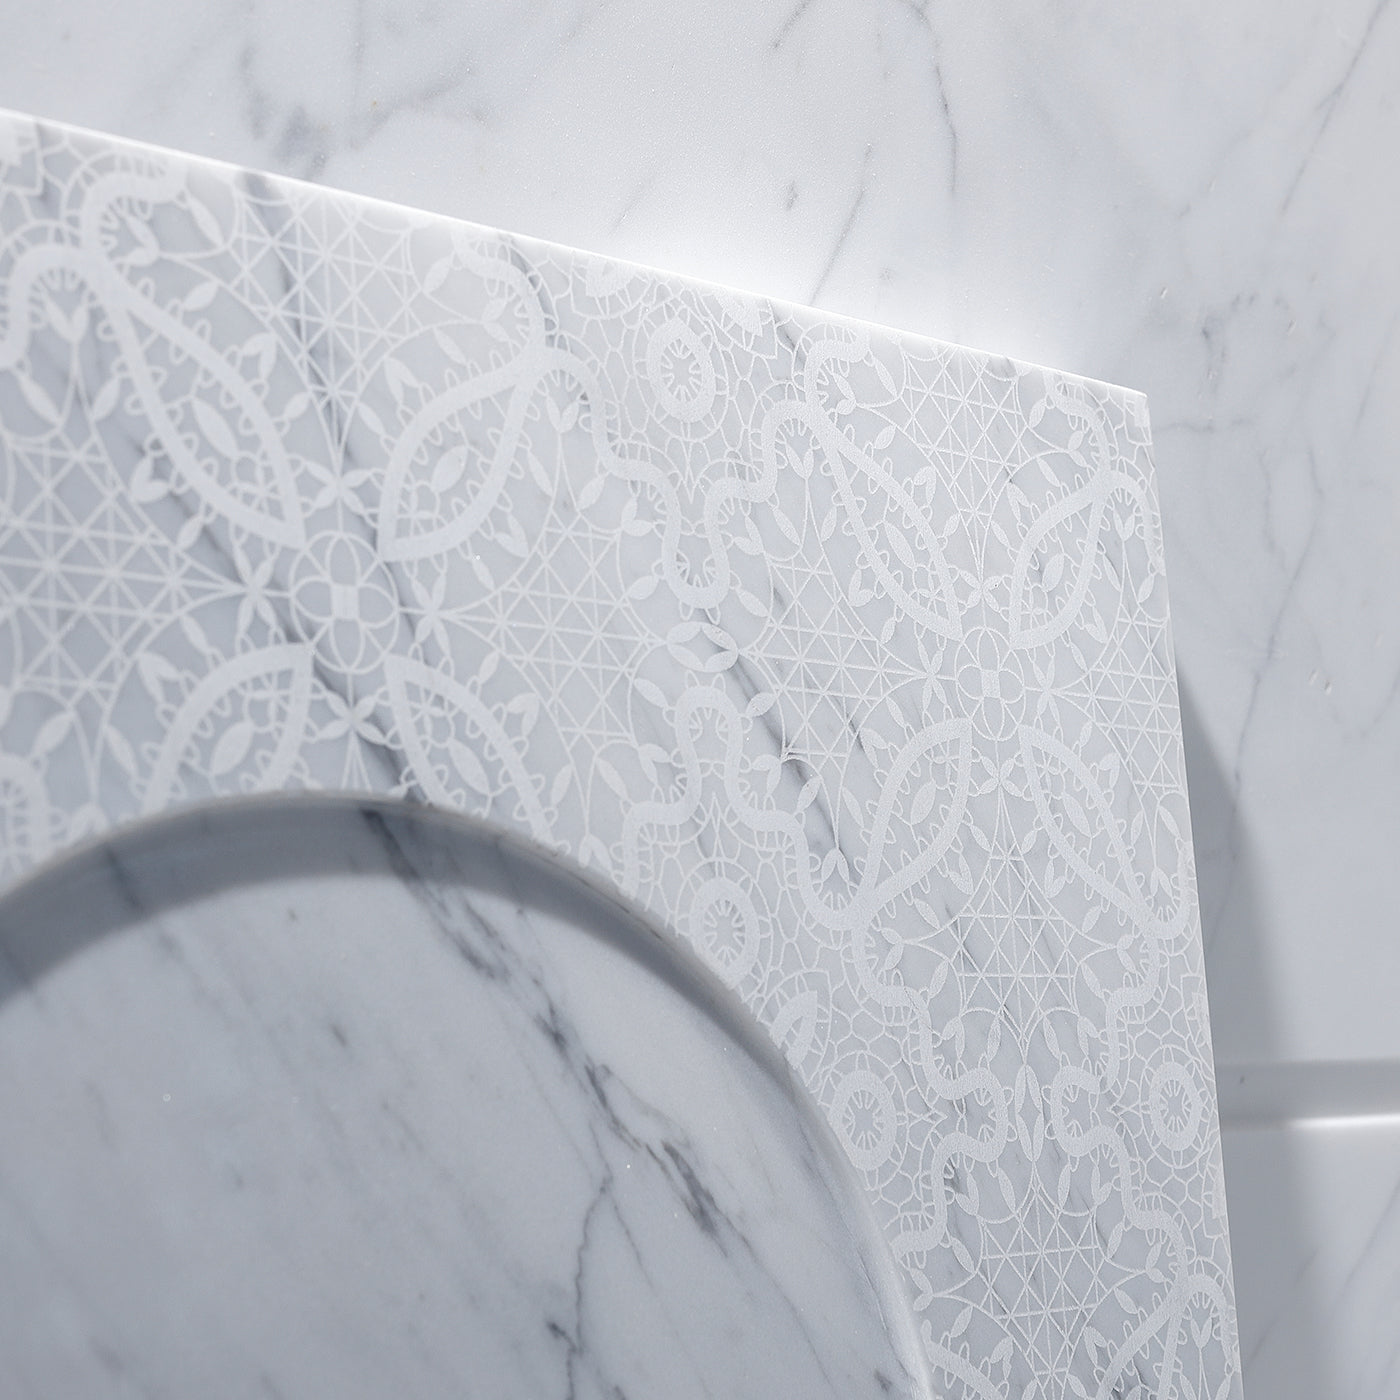 Venezia White Carrara Marble Q Plate - Alternative view 3